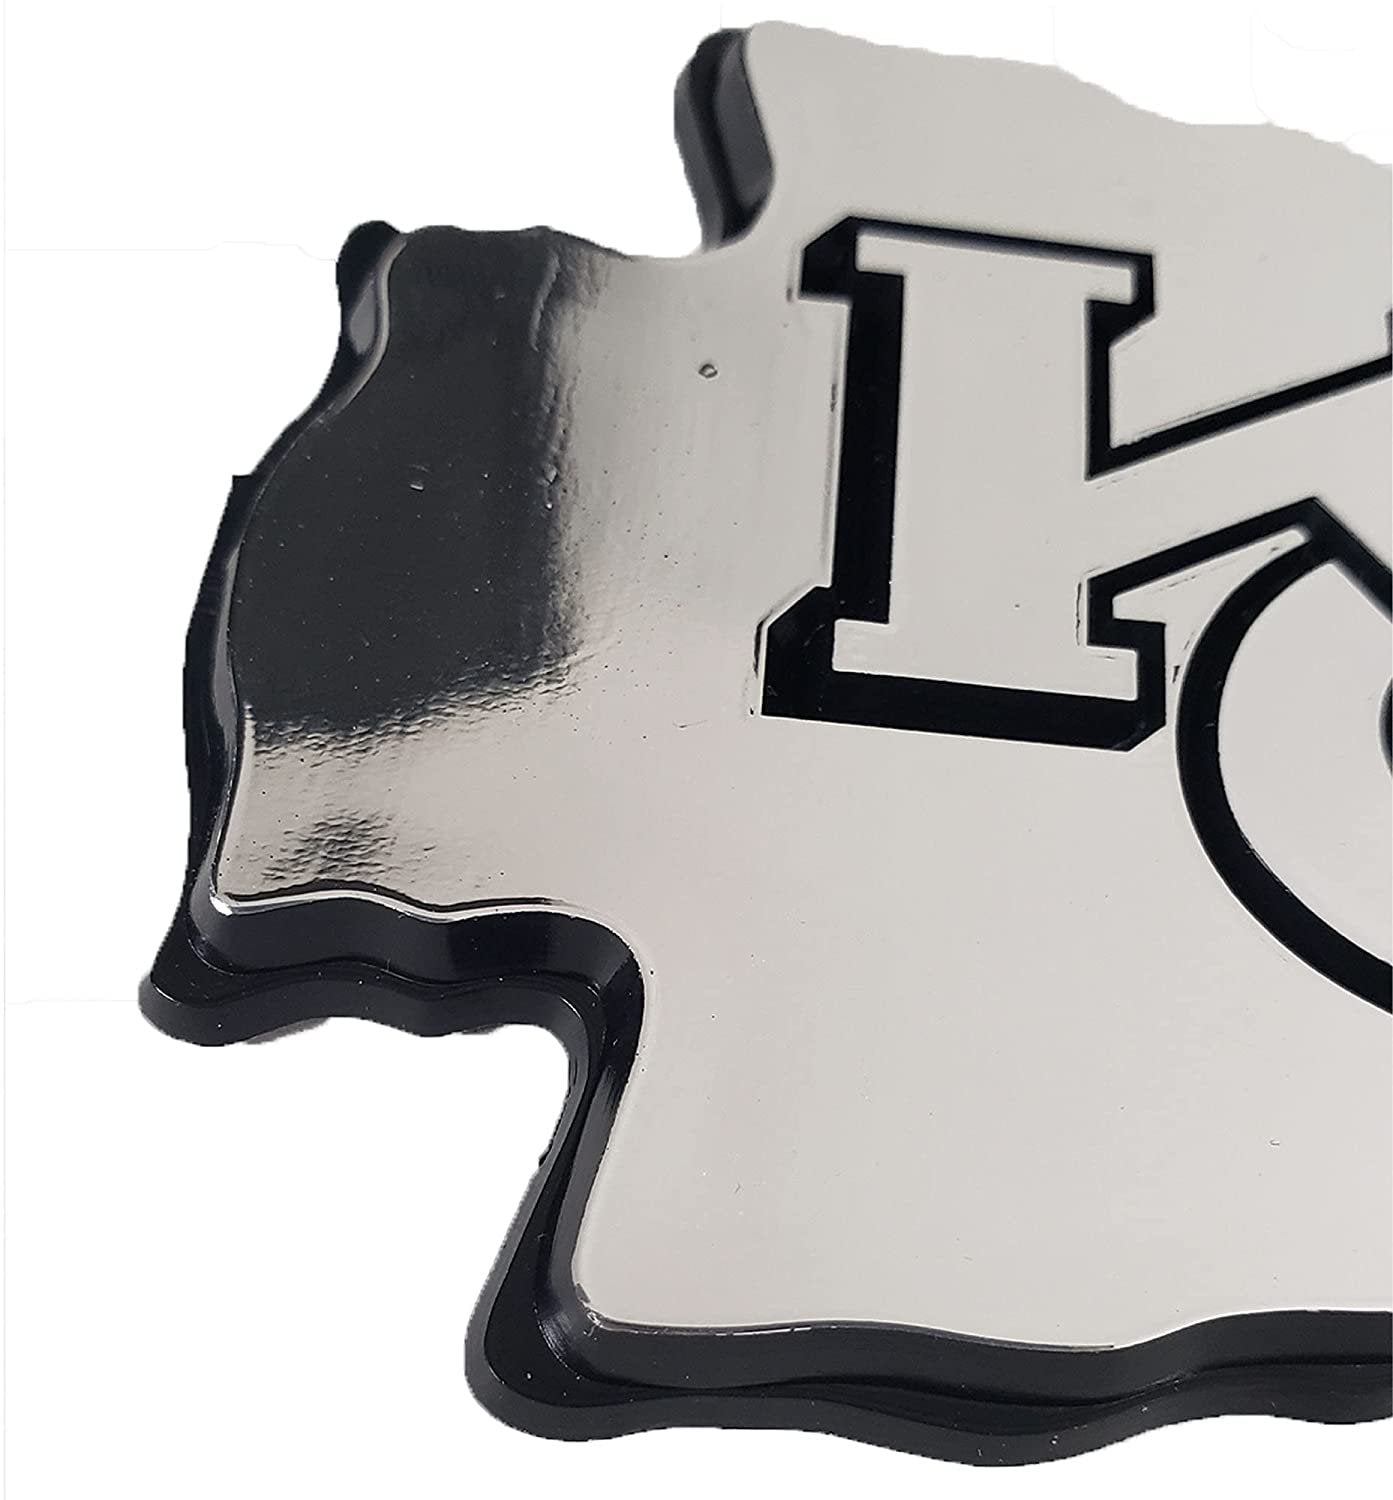 Arizona Coyotes Auto Emblem, Silver Chrome Color, Kachina Logo, Raised Molded Shape Cut Plastic, Adhesive Tape Backing